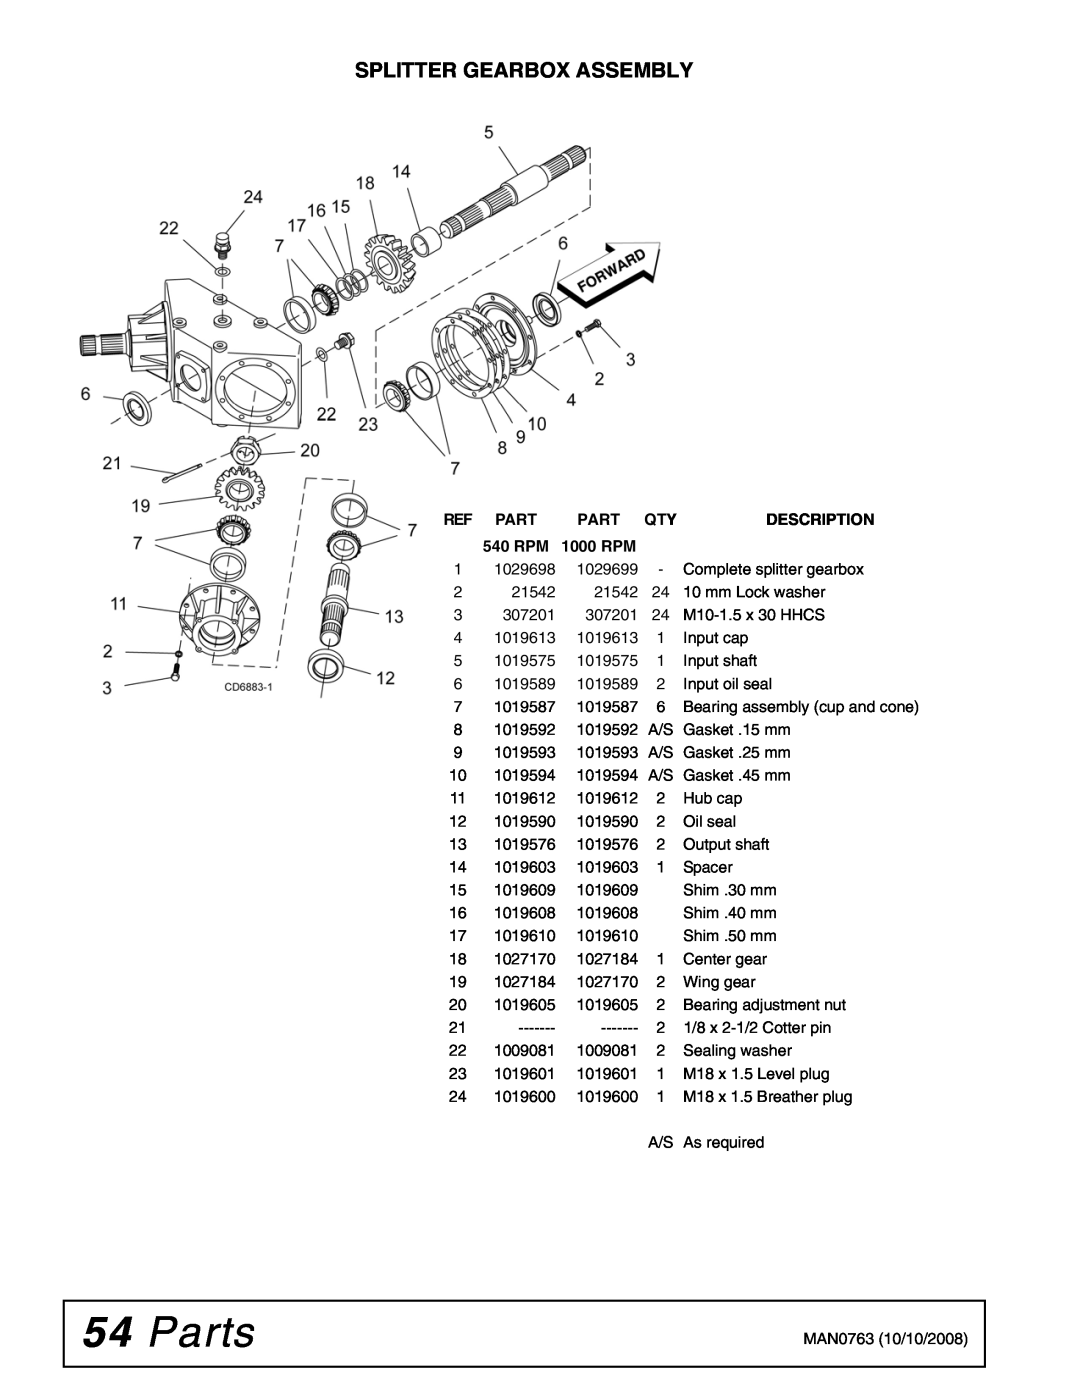 Woods Equipment BW240HDQ manual Parts, Splitter Gearbox Assembly, Description, 540 RPM, 1000 RPM, 1029698, 1029699 